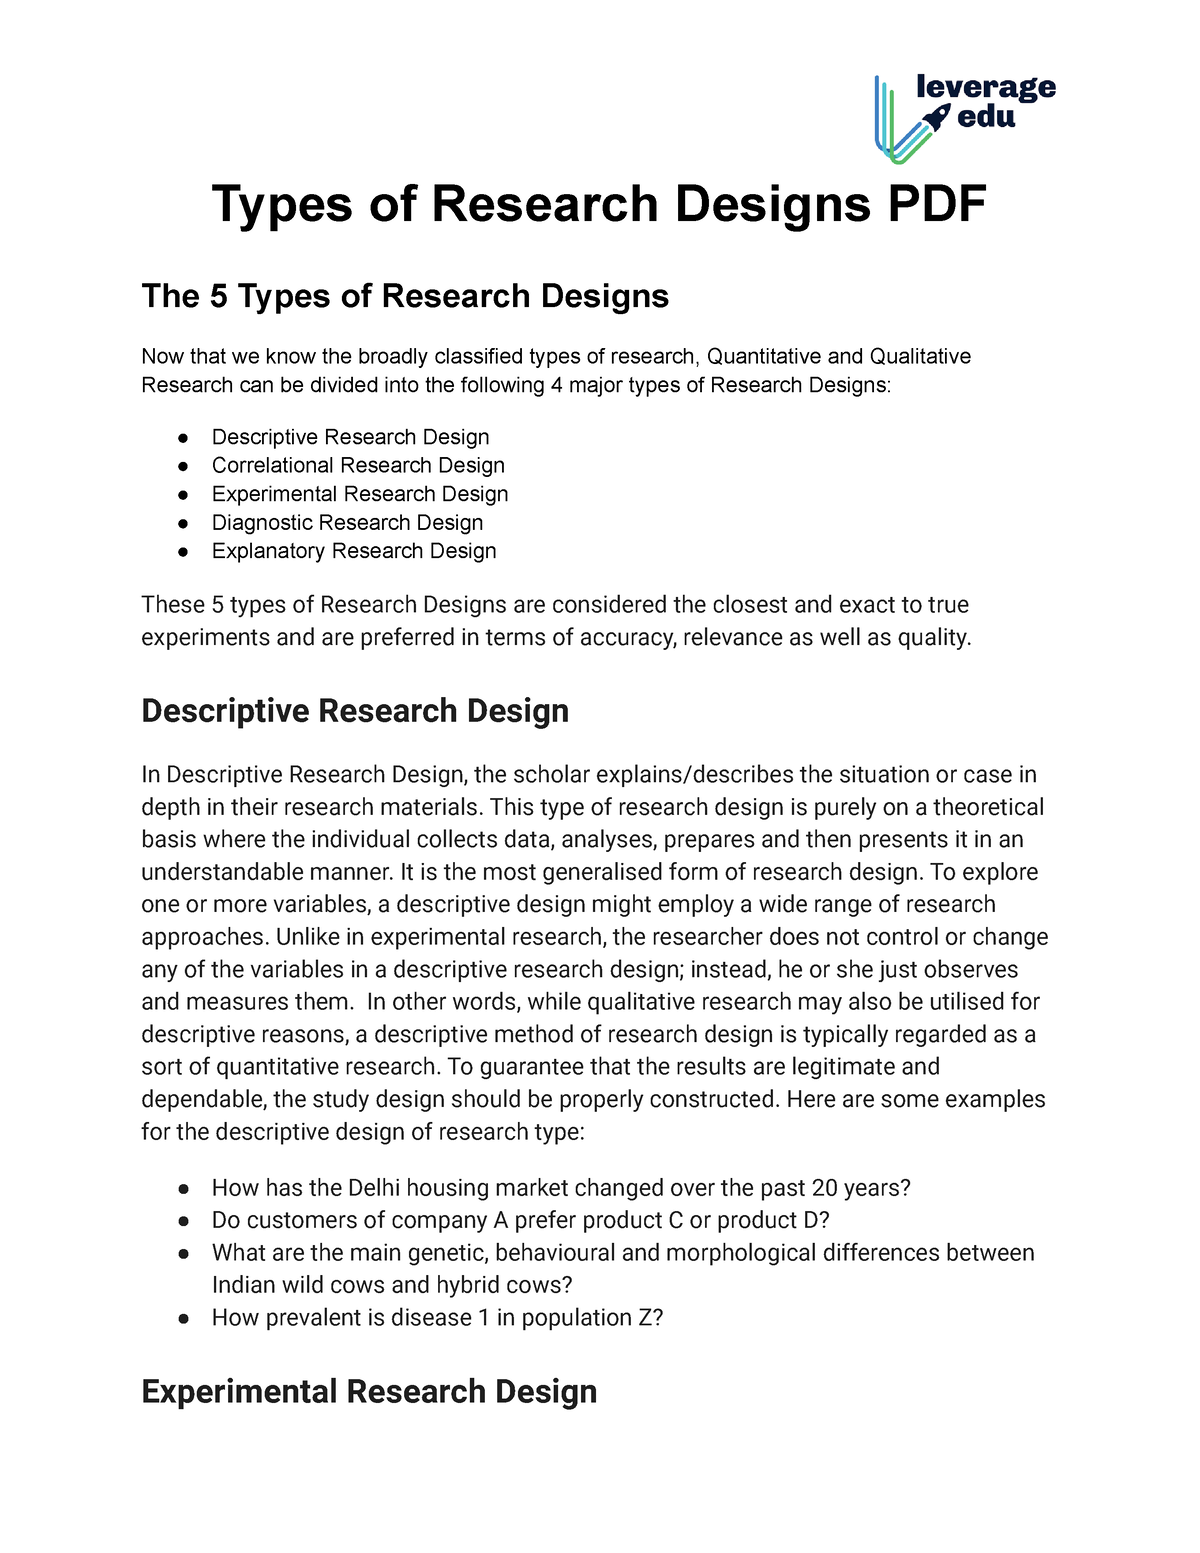 literature about descriptive research design